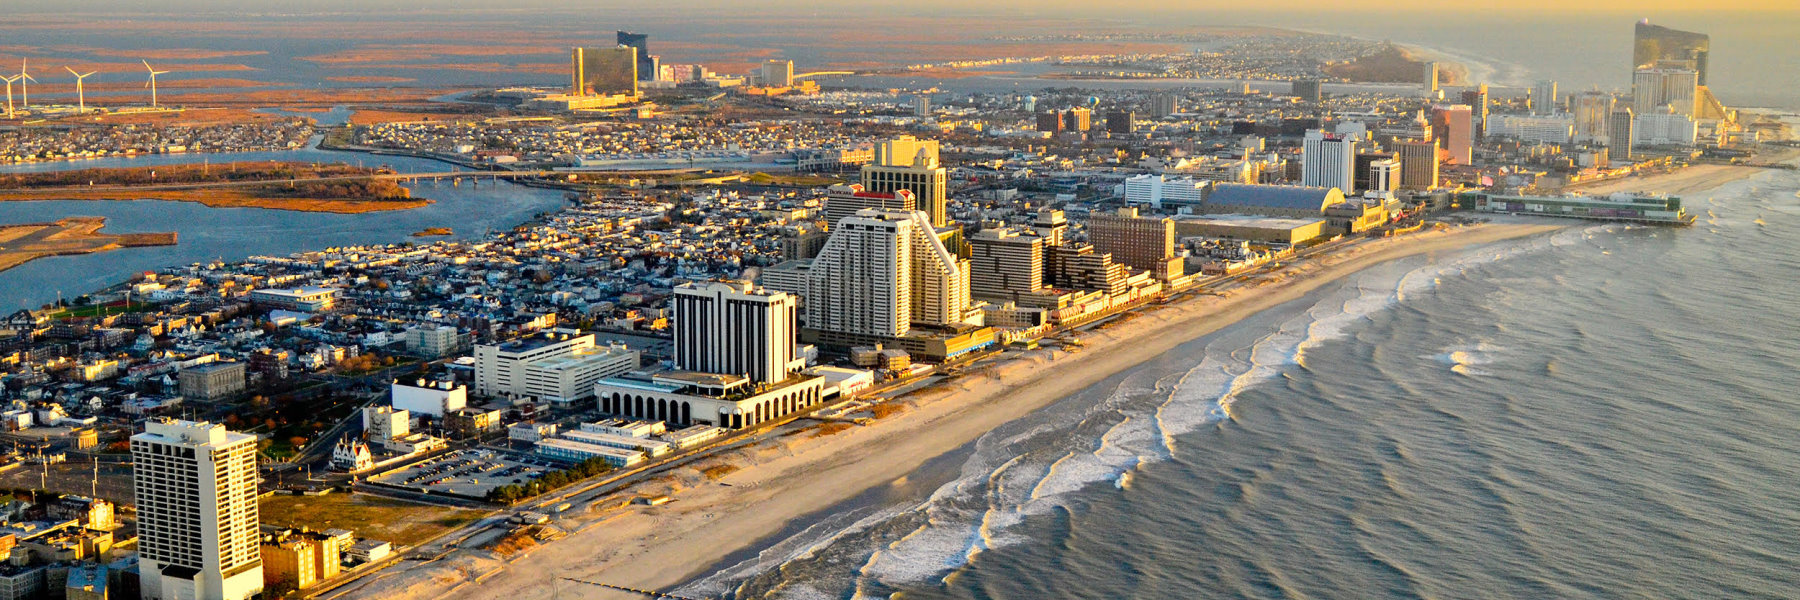 Atlantic City vacation homes